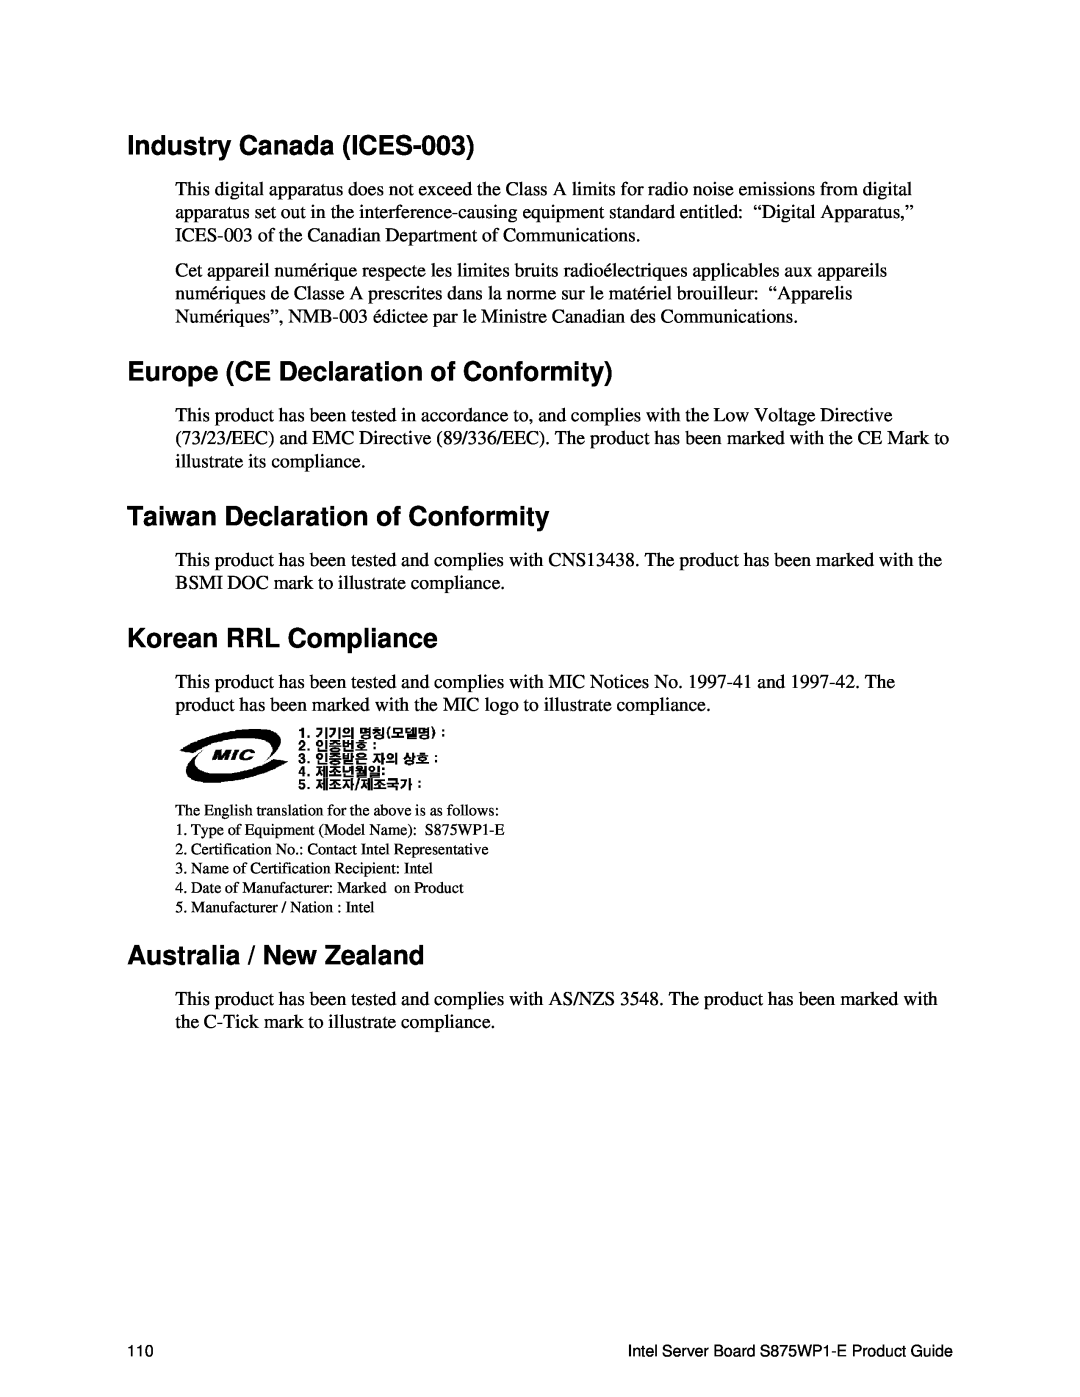 Intel S875WP1-E manual Industry Canada ICES-003, Europe CE Declaration of Conformity, Taiwan Declaration of Conformity 